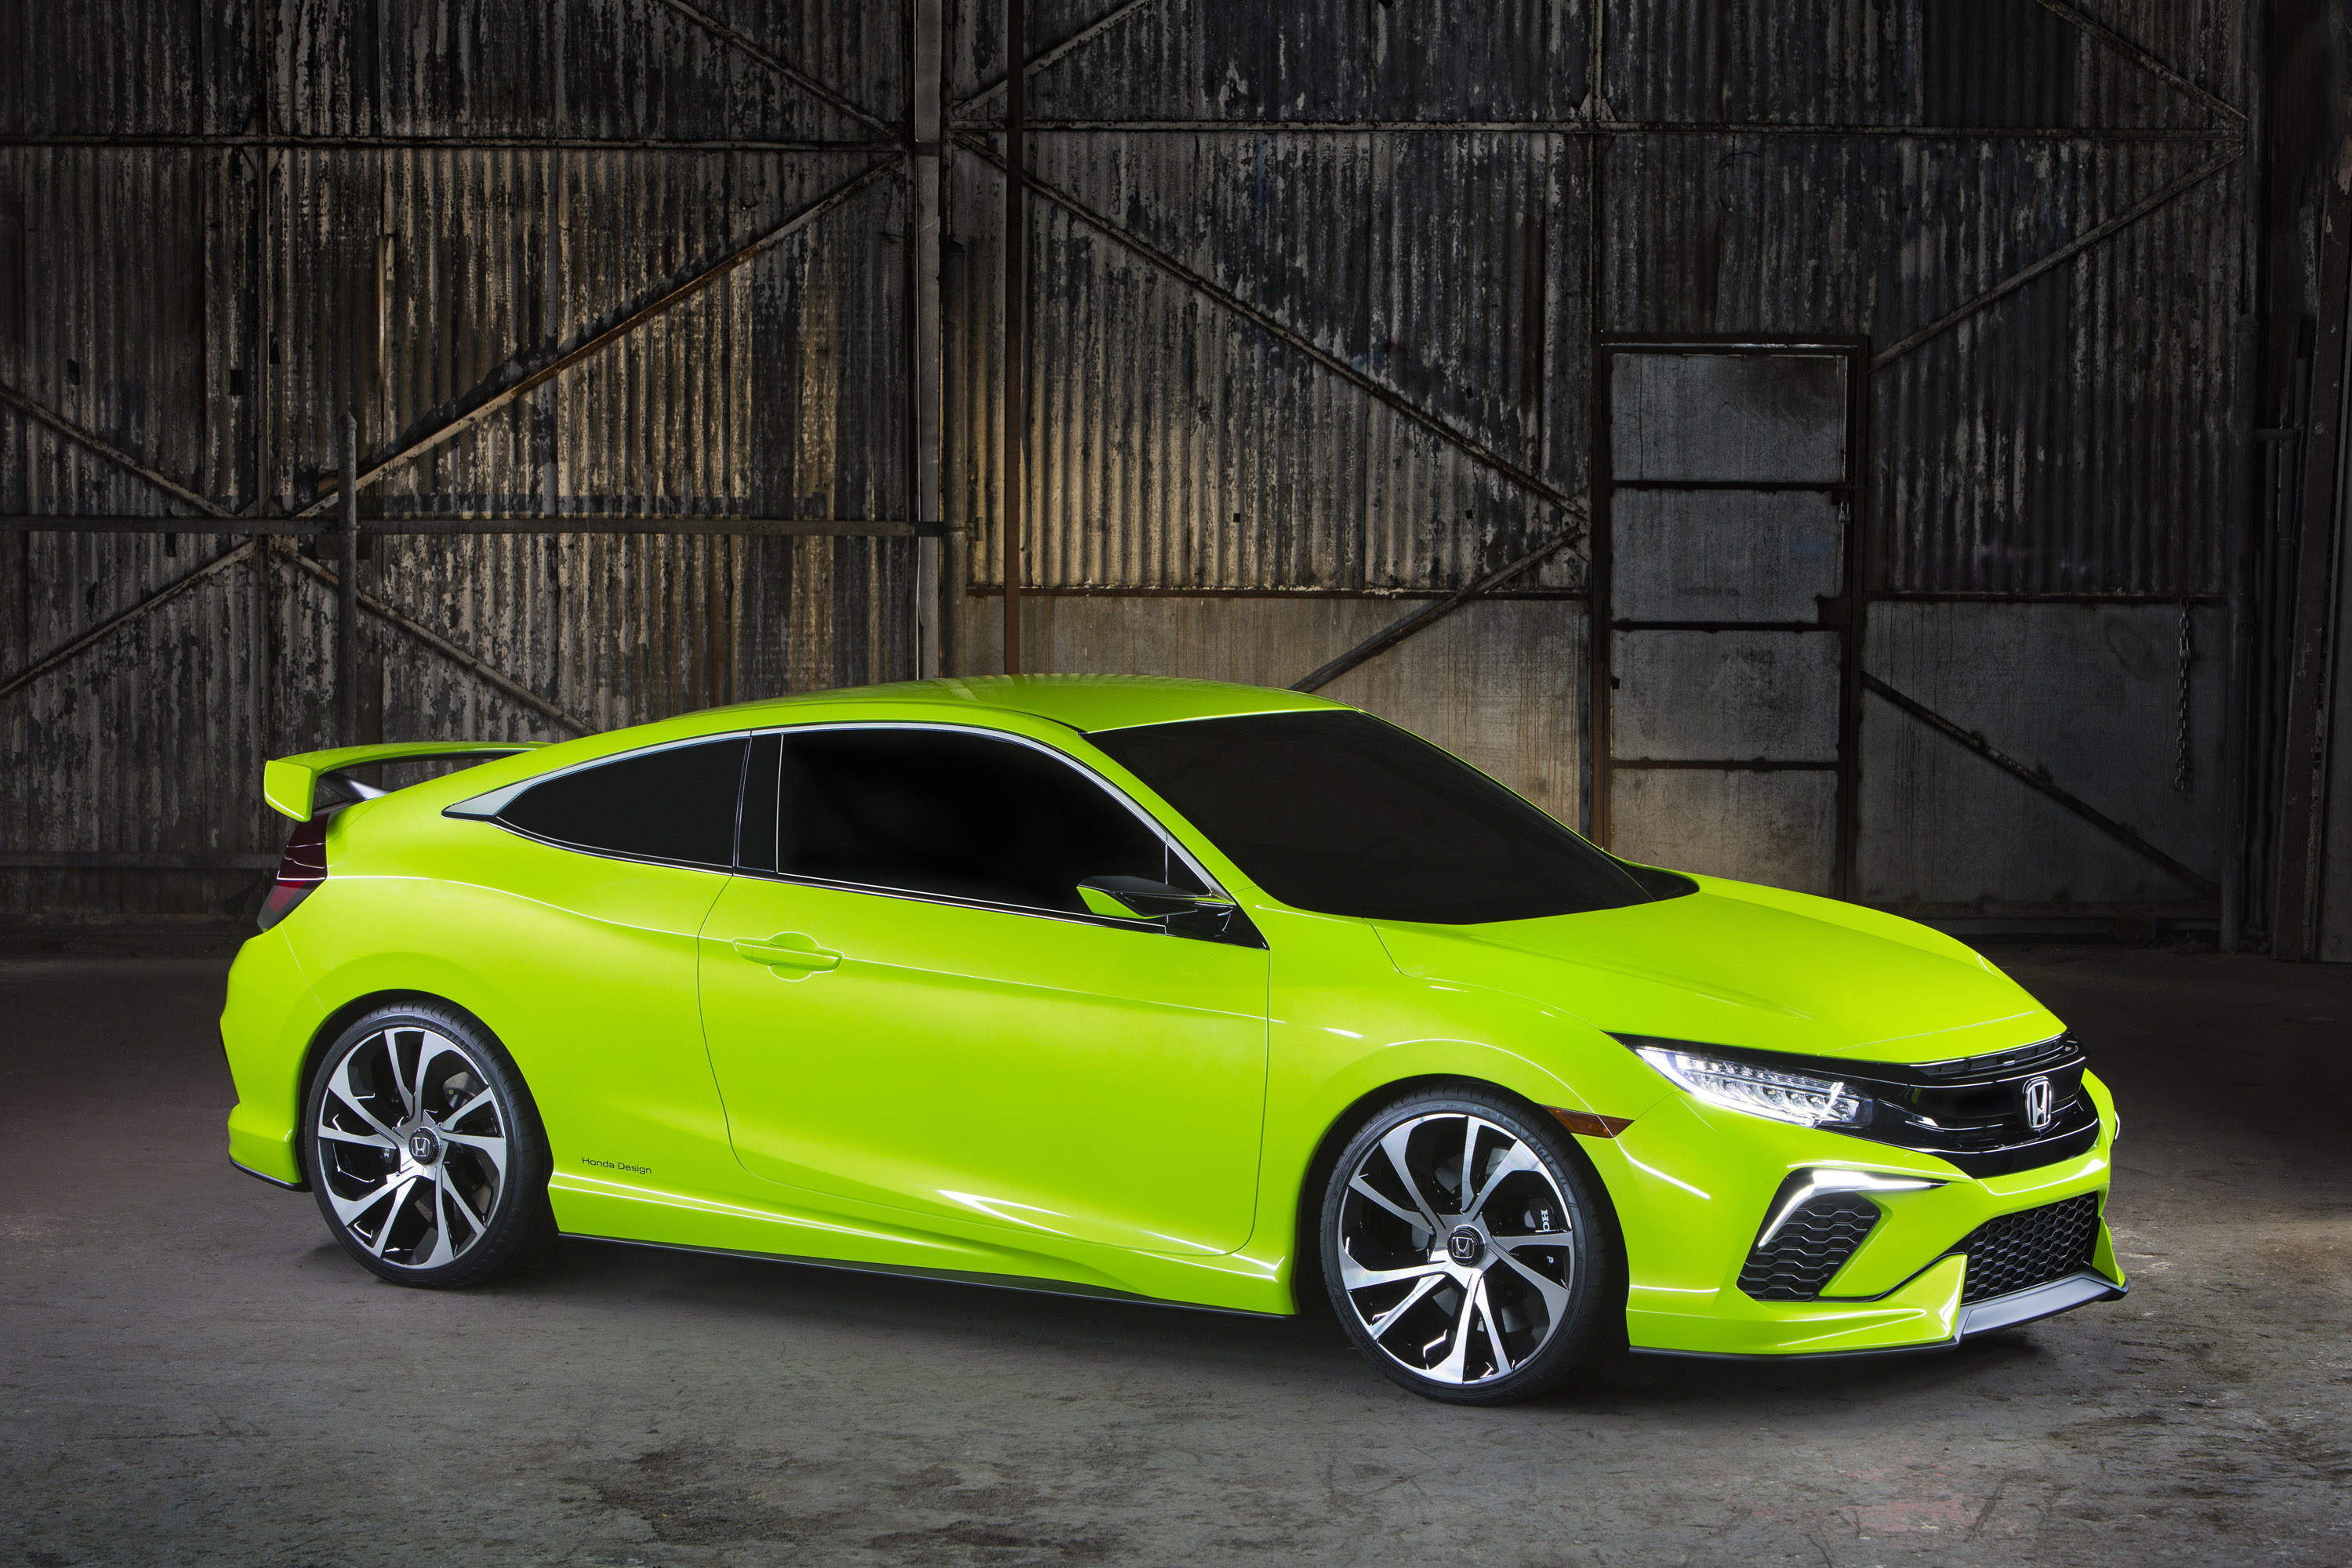 2015 Honda Civic Concept - HD Pictures @ carsinvasion.com